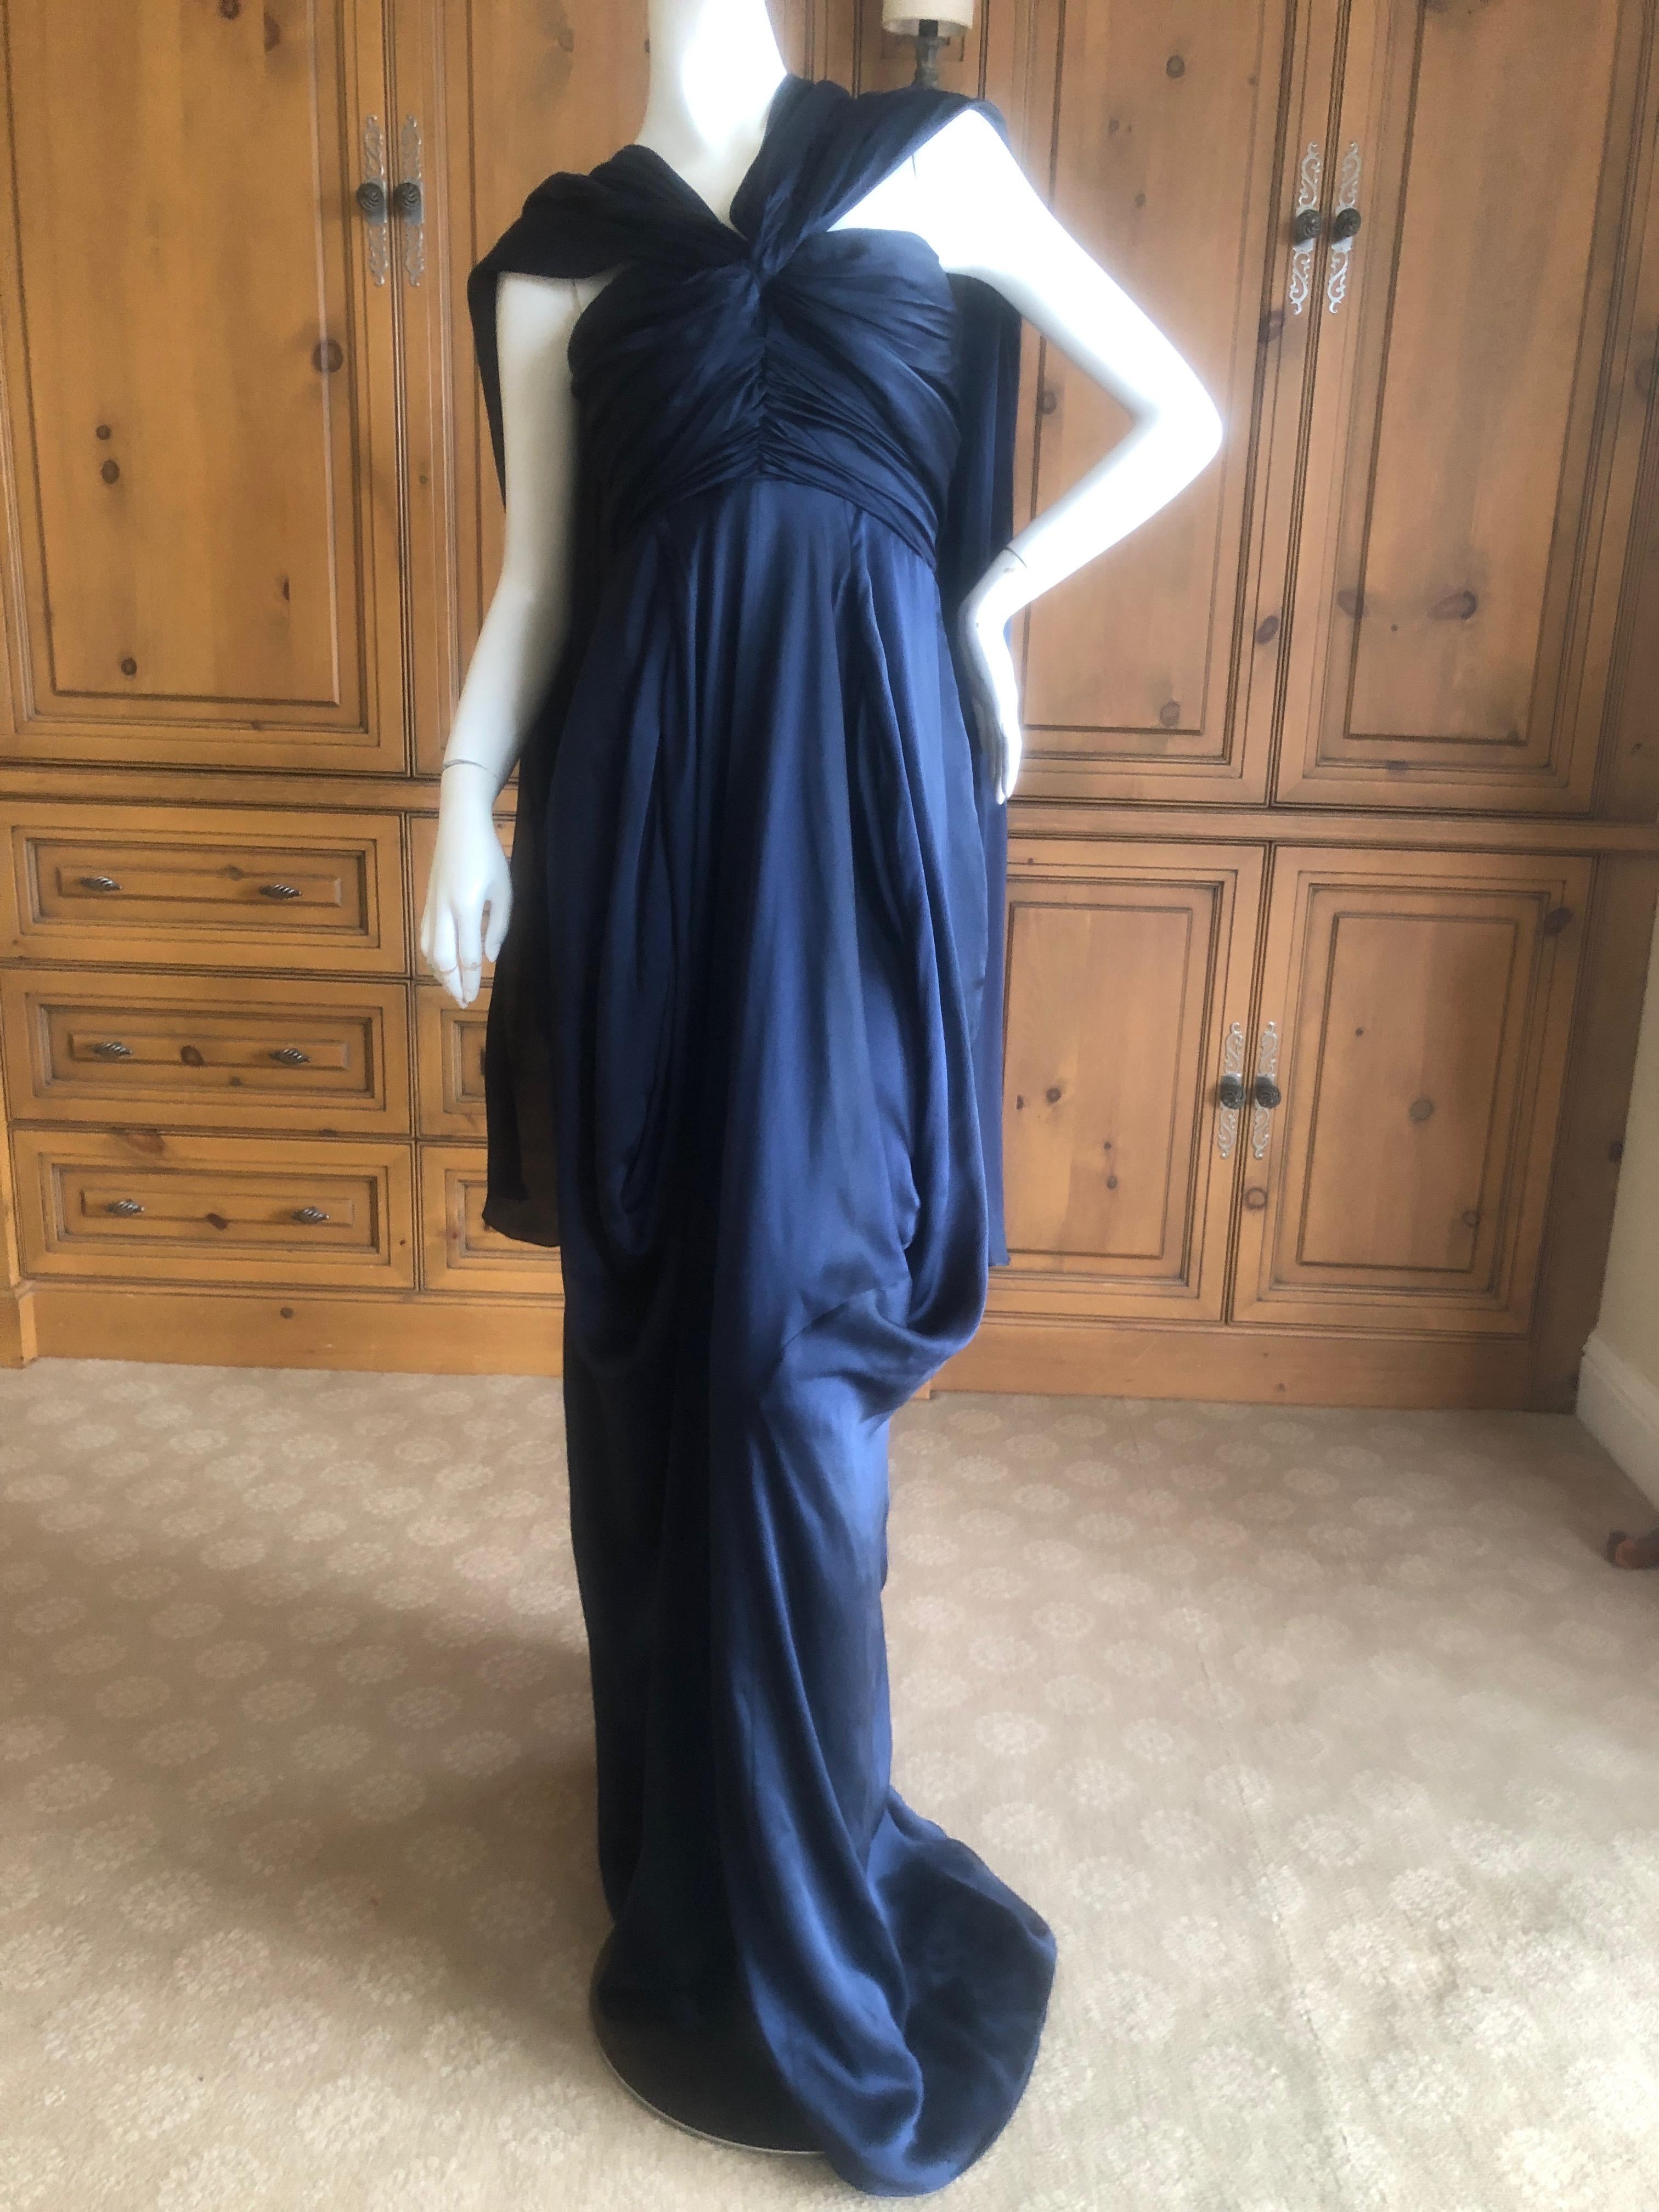 Yves Saint Laurent Rive Gauche Vintage Slate Silk Evening Dress with Draped Back
Appx Size 44
Bust 38